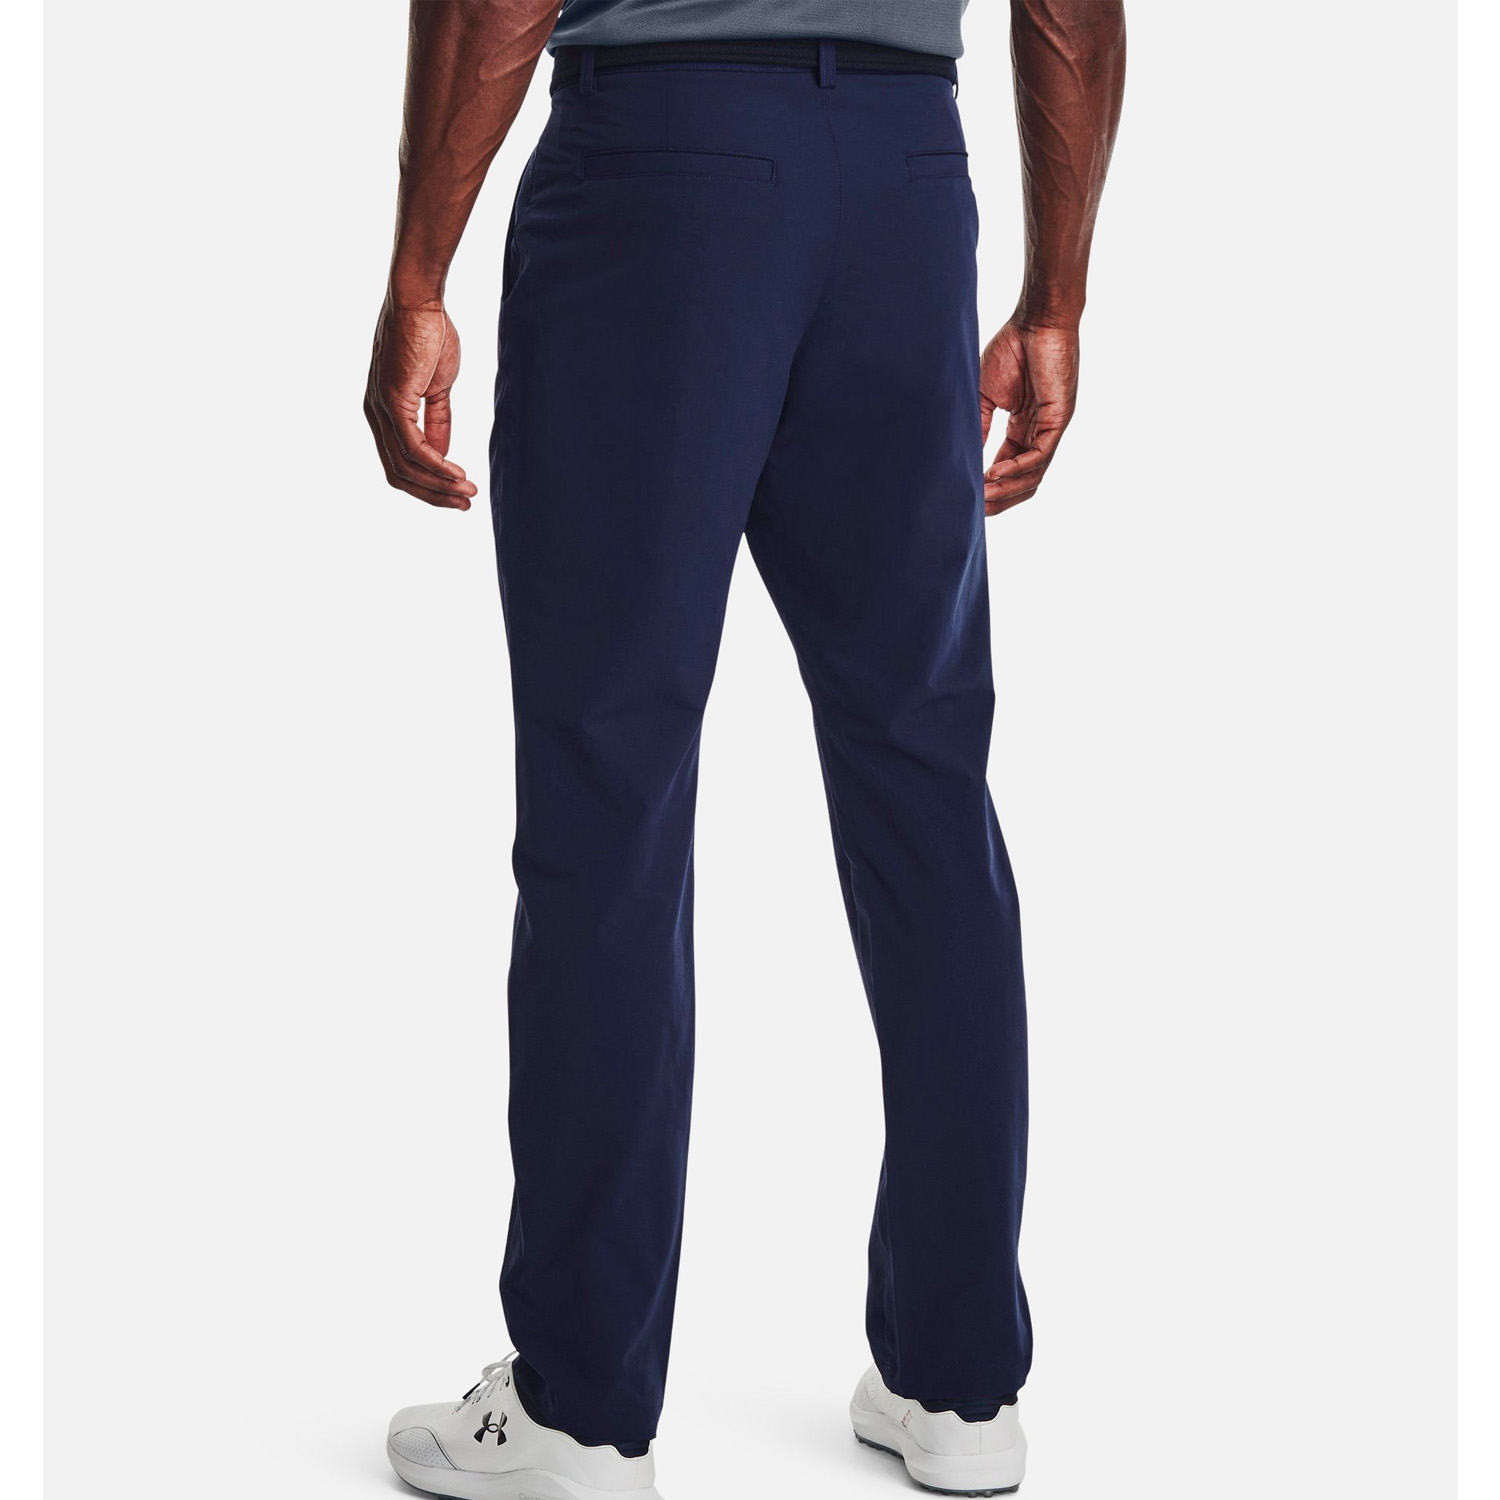 Under Armour Men’s UA Tech Pants Golf Trousers  - Midnight Navy